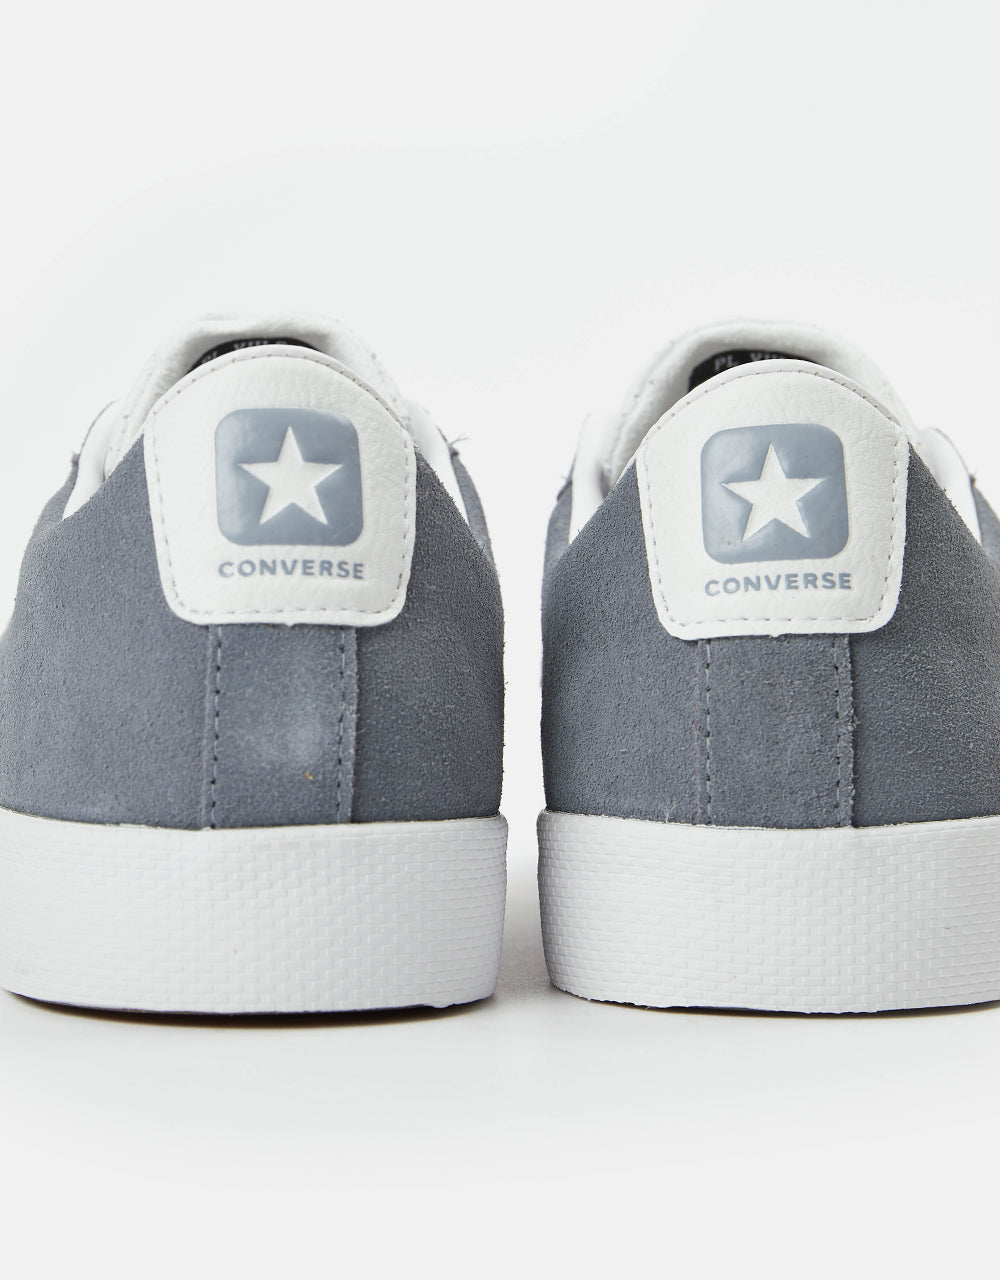 Converse PL Vulc Pro Ox Summer Skate Shoes - Lunar Grey/White/White